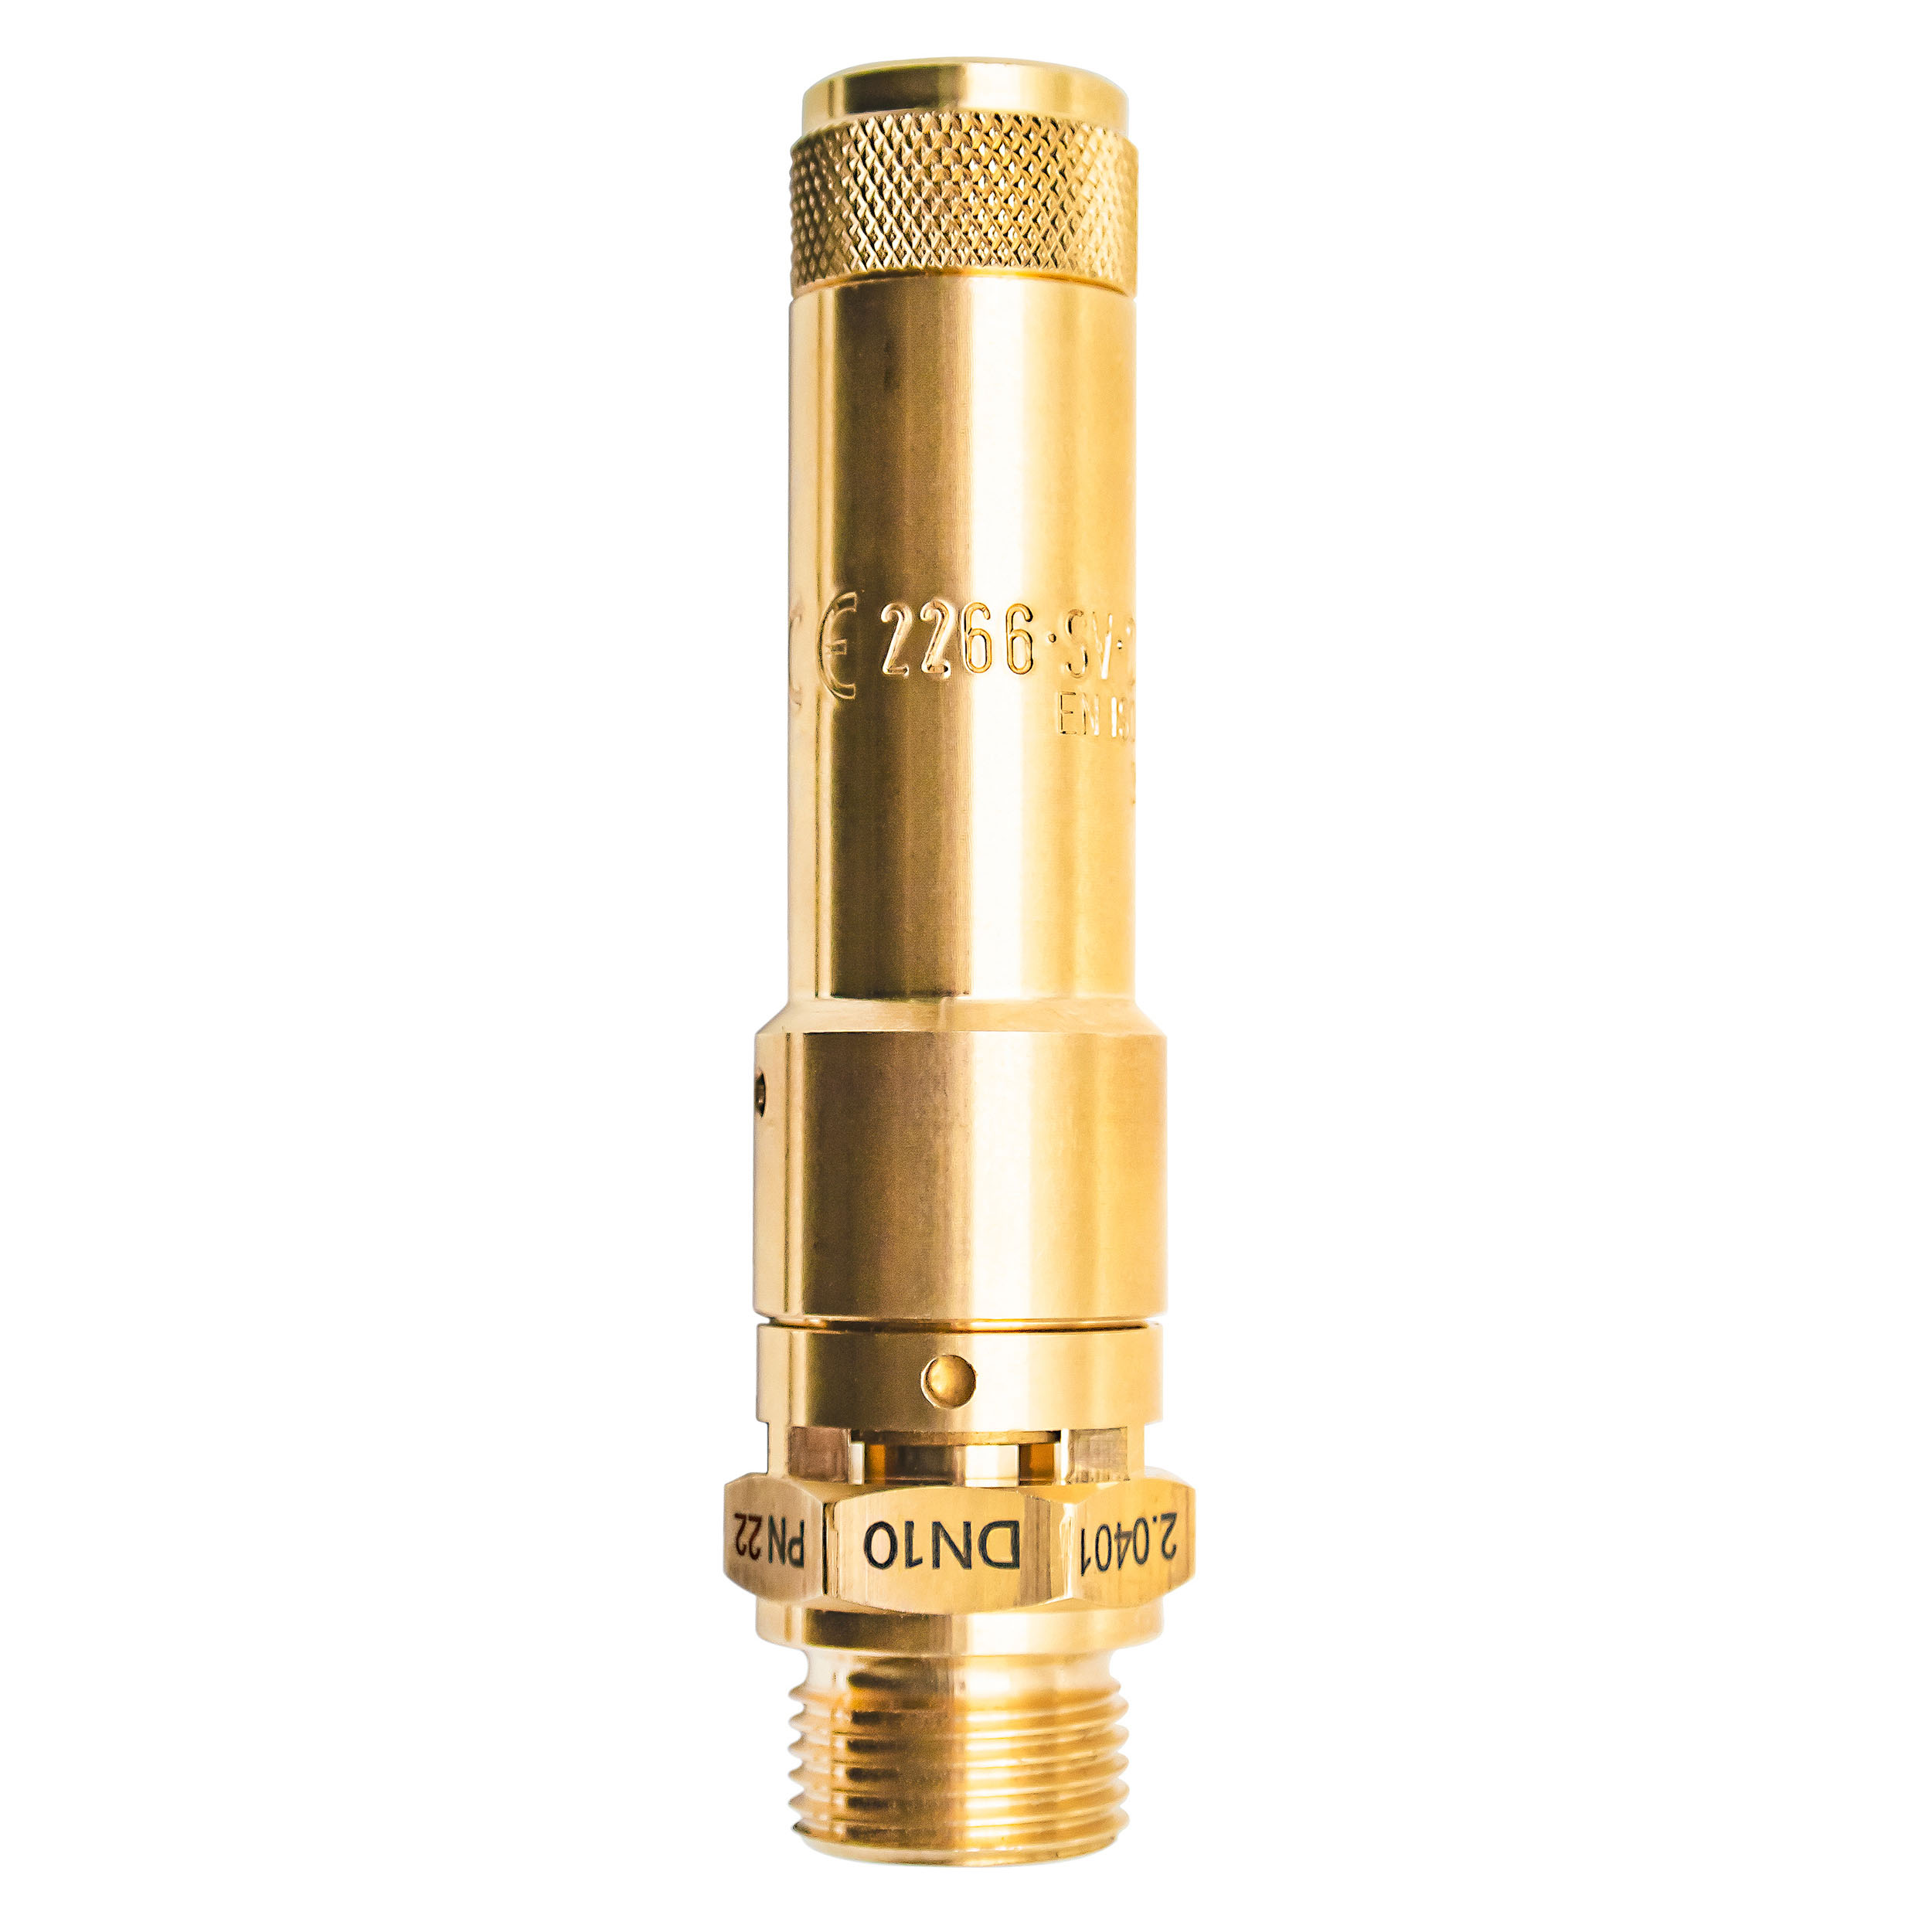 Savety valve component tested DN 10, G½, set pressure: 4.4 bar (63,8 psi)